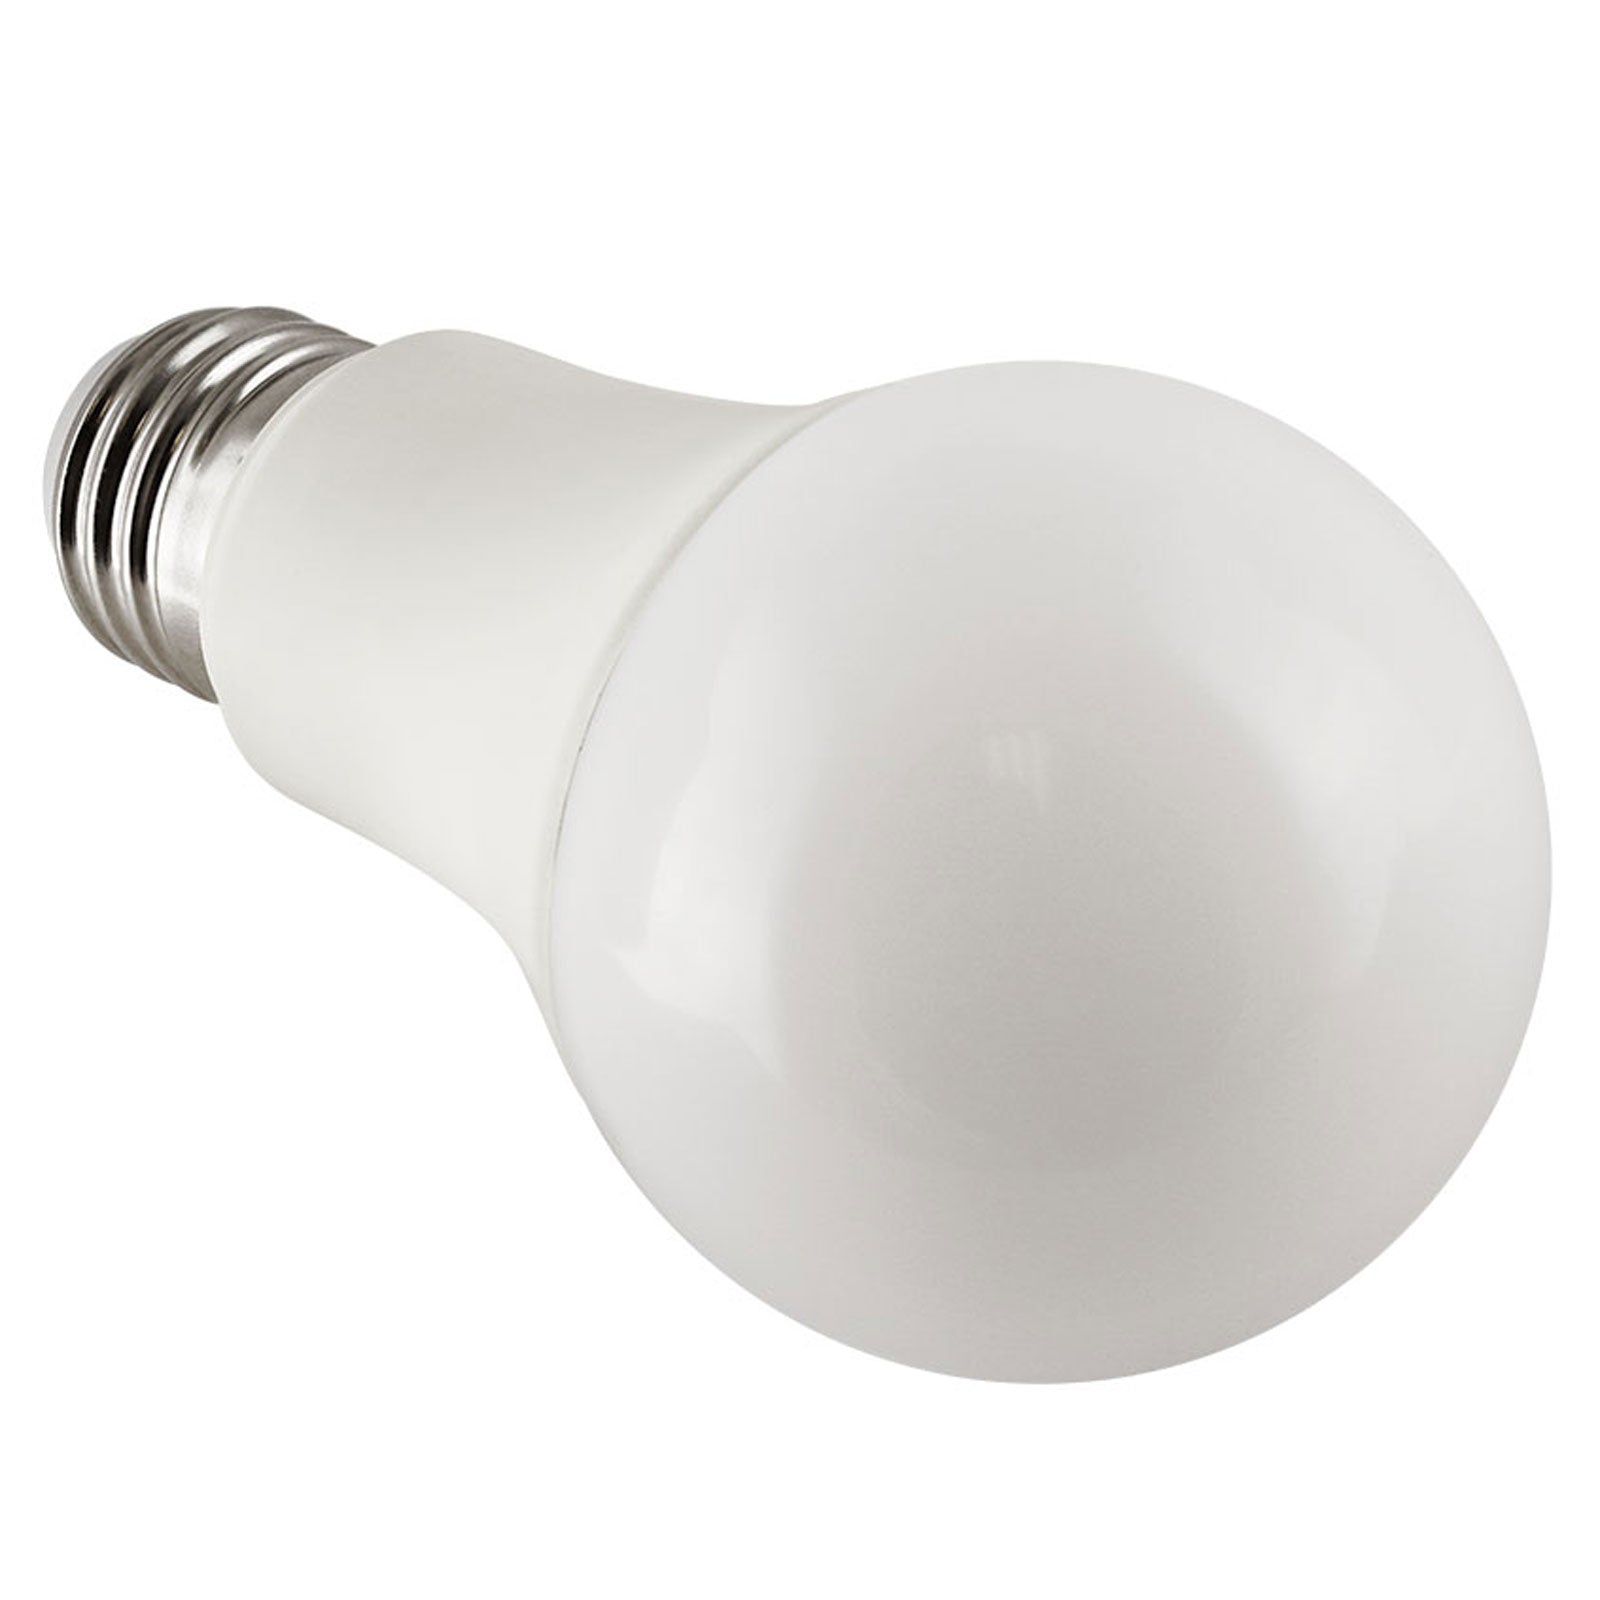 40/60/80-Watt Equivalent 3-Way A19 E26 General Purpose LED Light Bulb